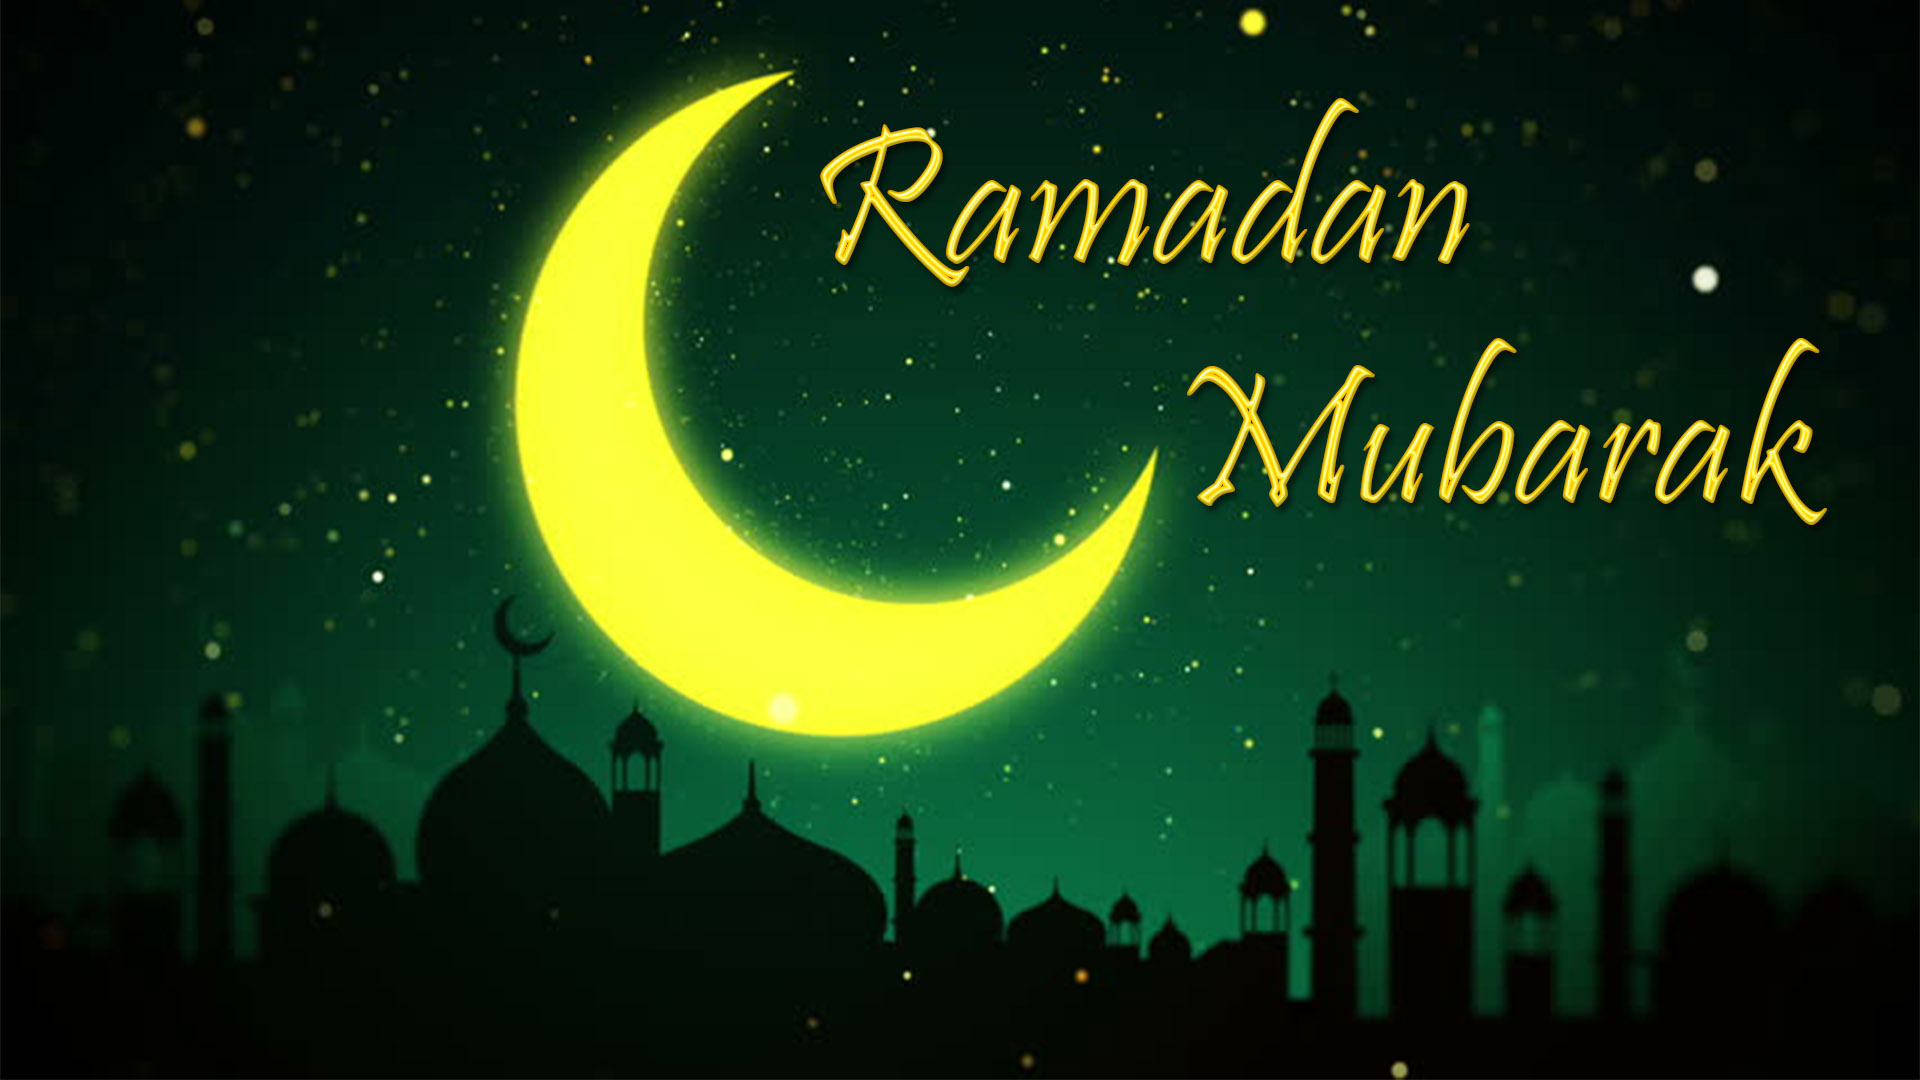 ramadan wishes image